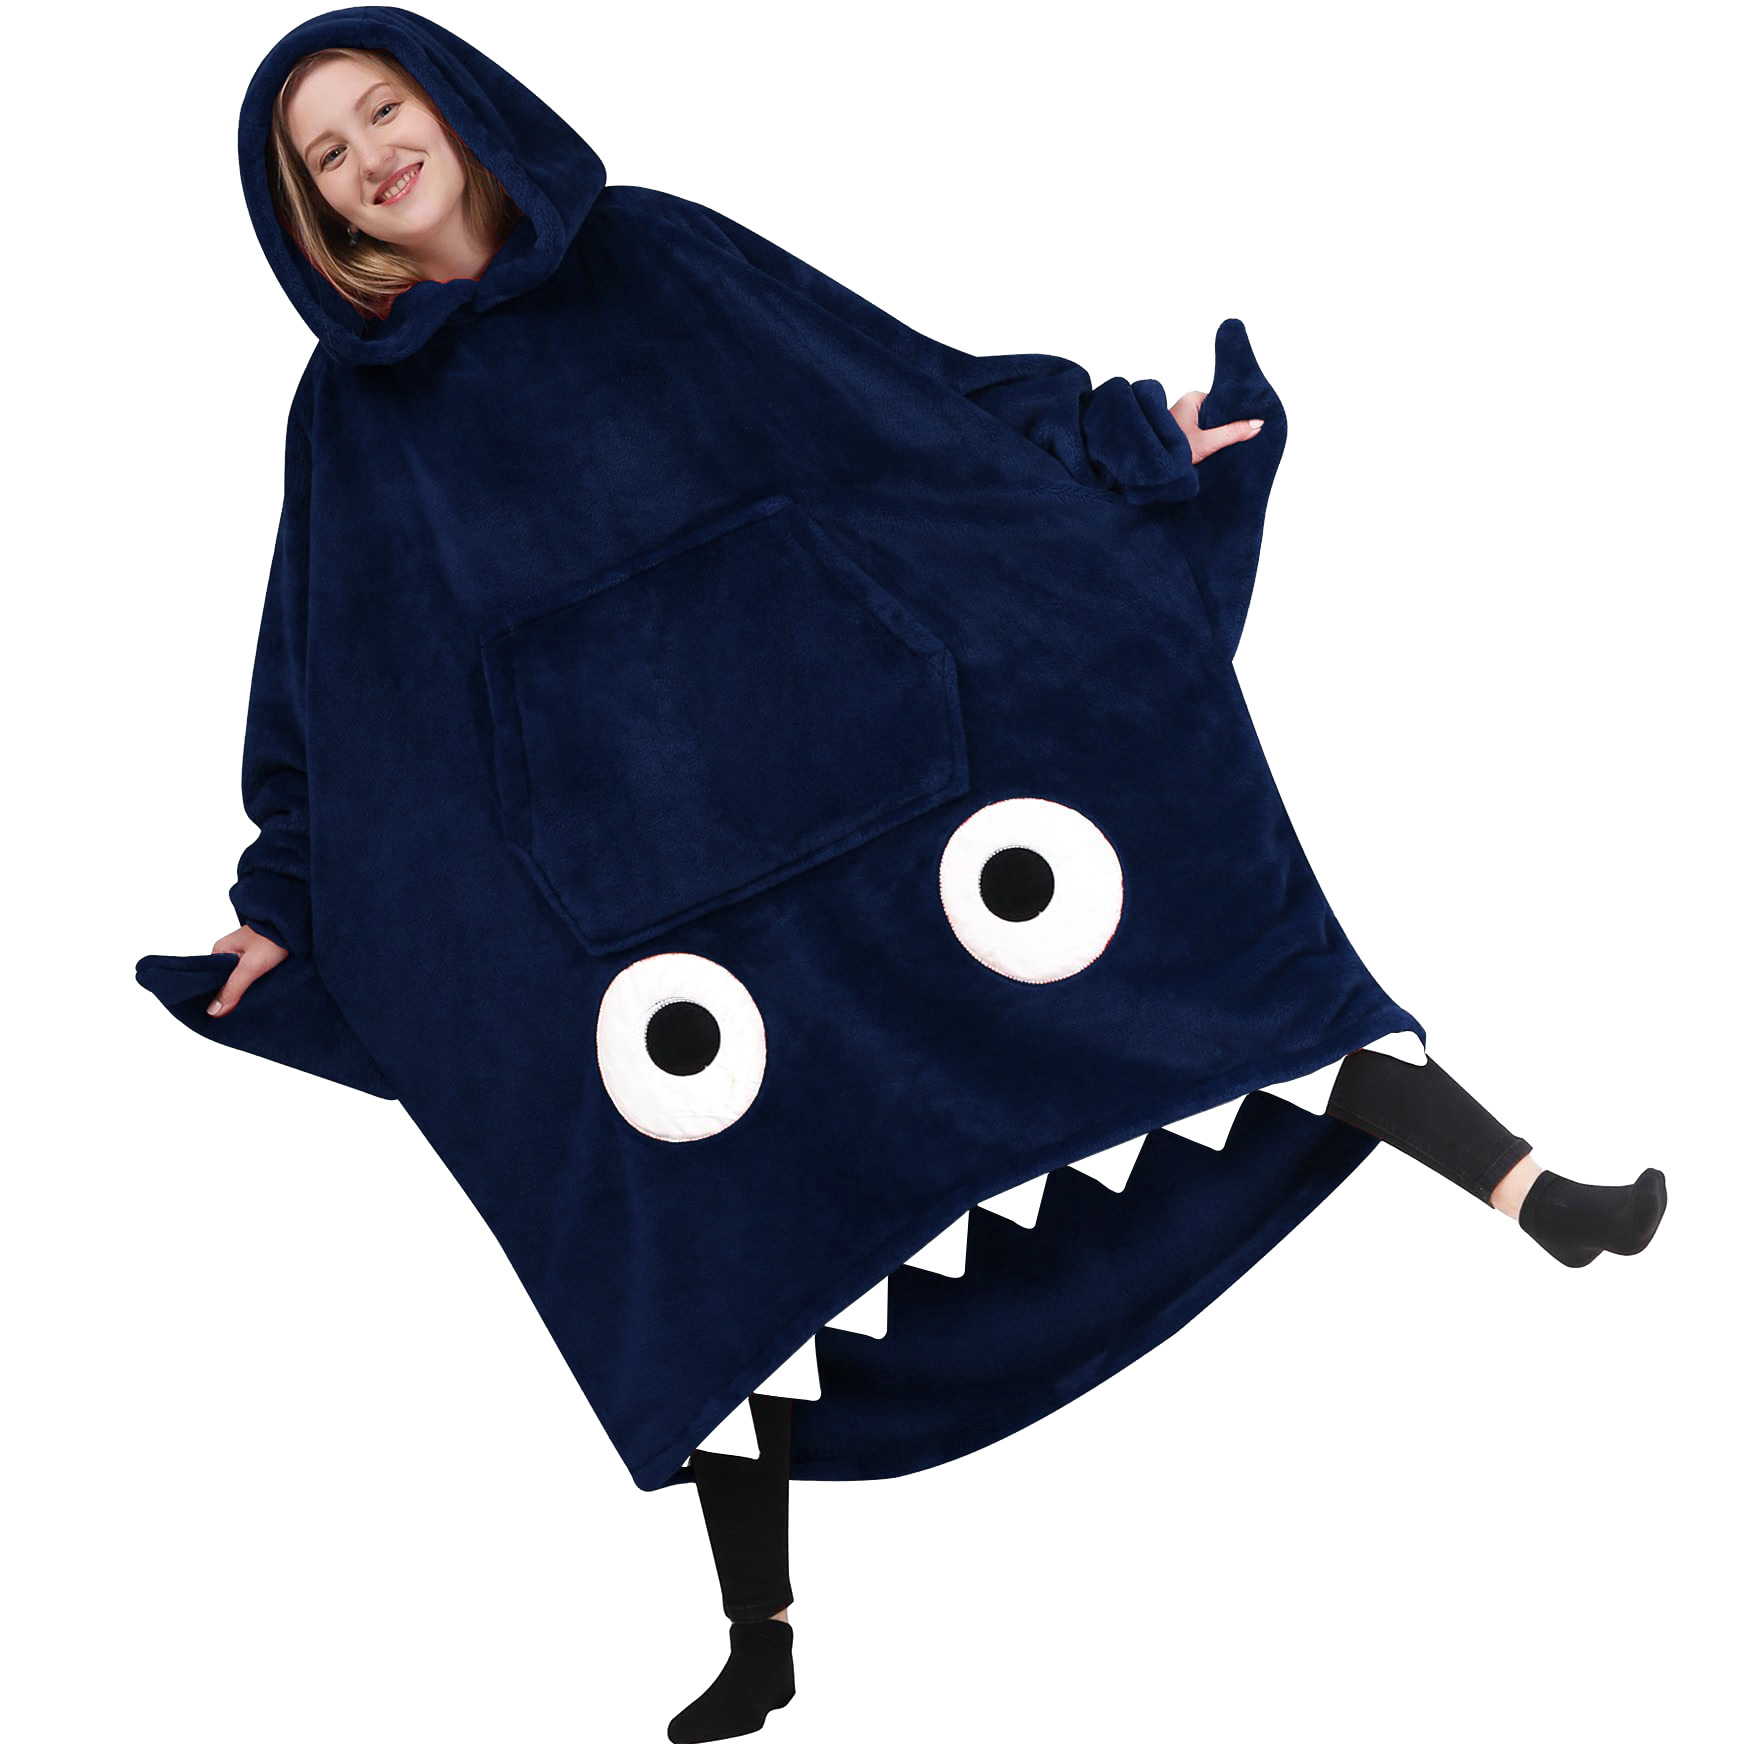  Mycozyshark Blanket, Shark Blanket Hoodie, Shark